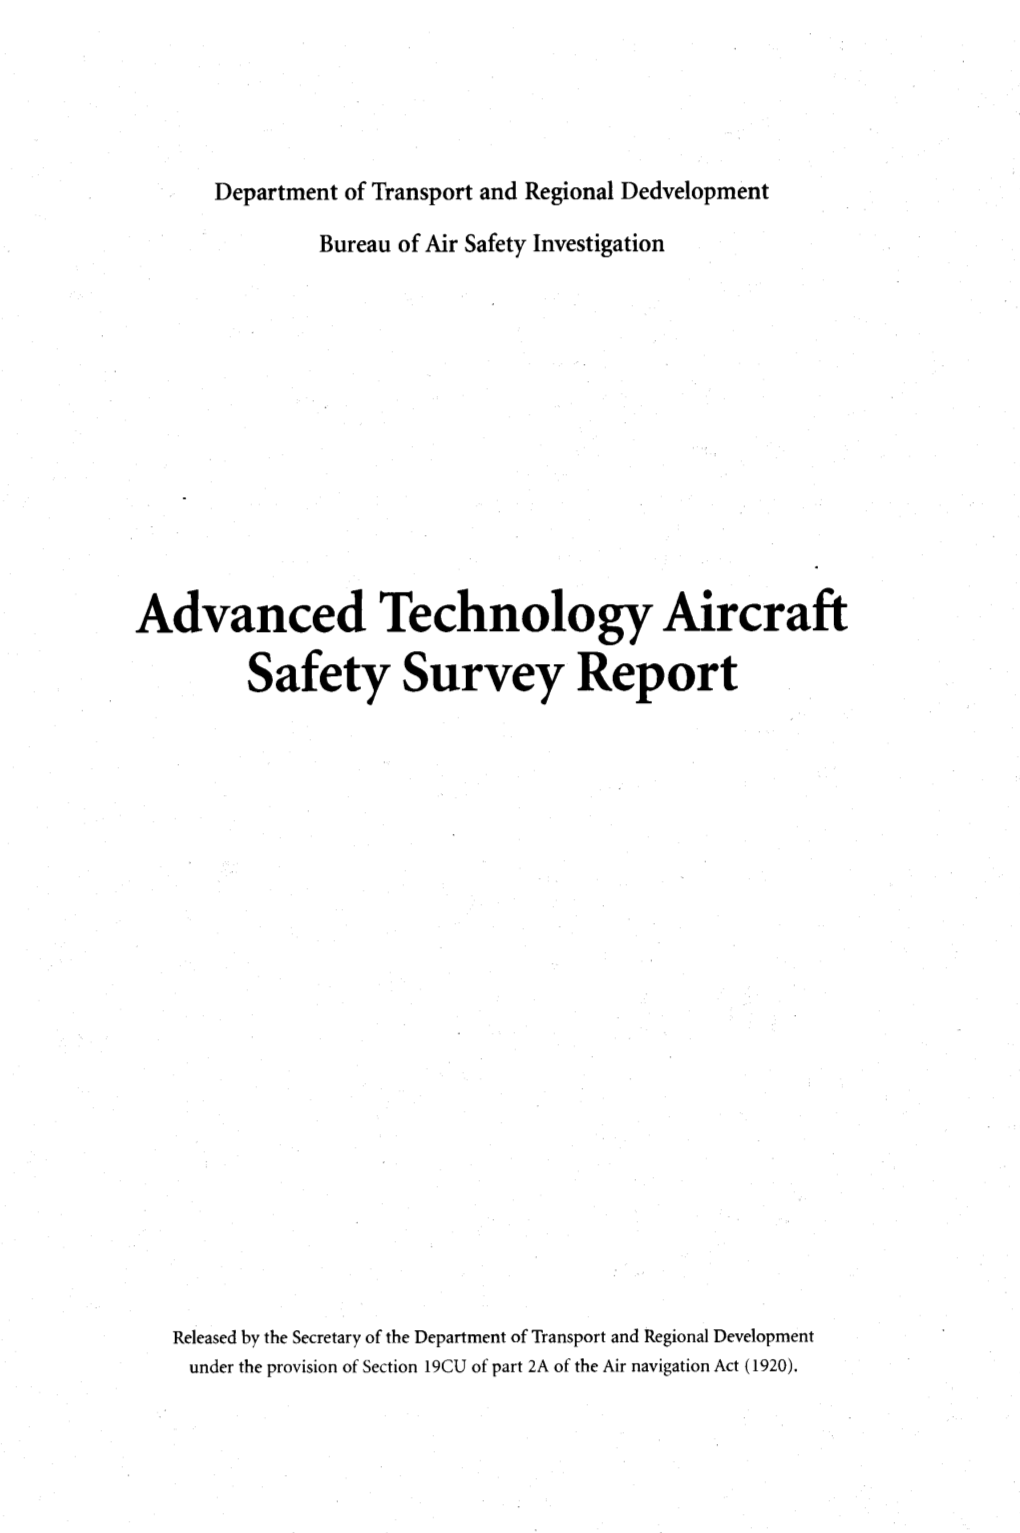 Advanced Technology Aircraft Safety Survey Report